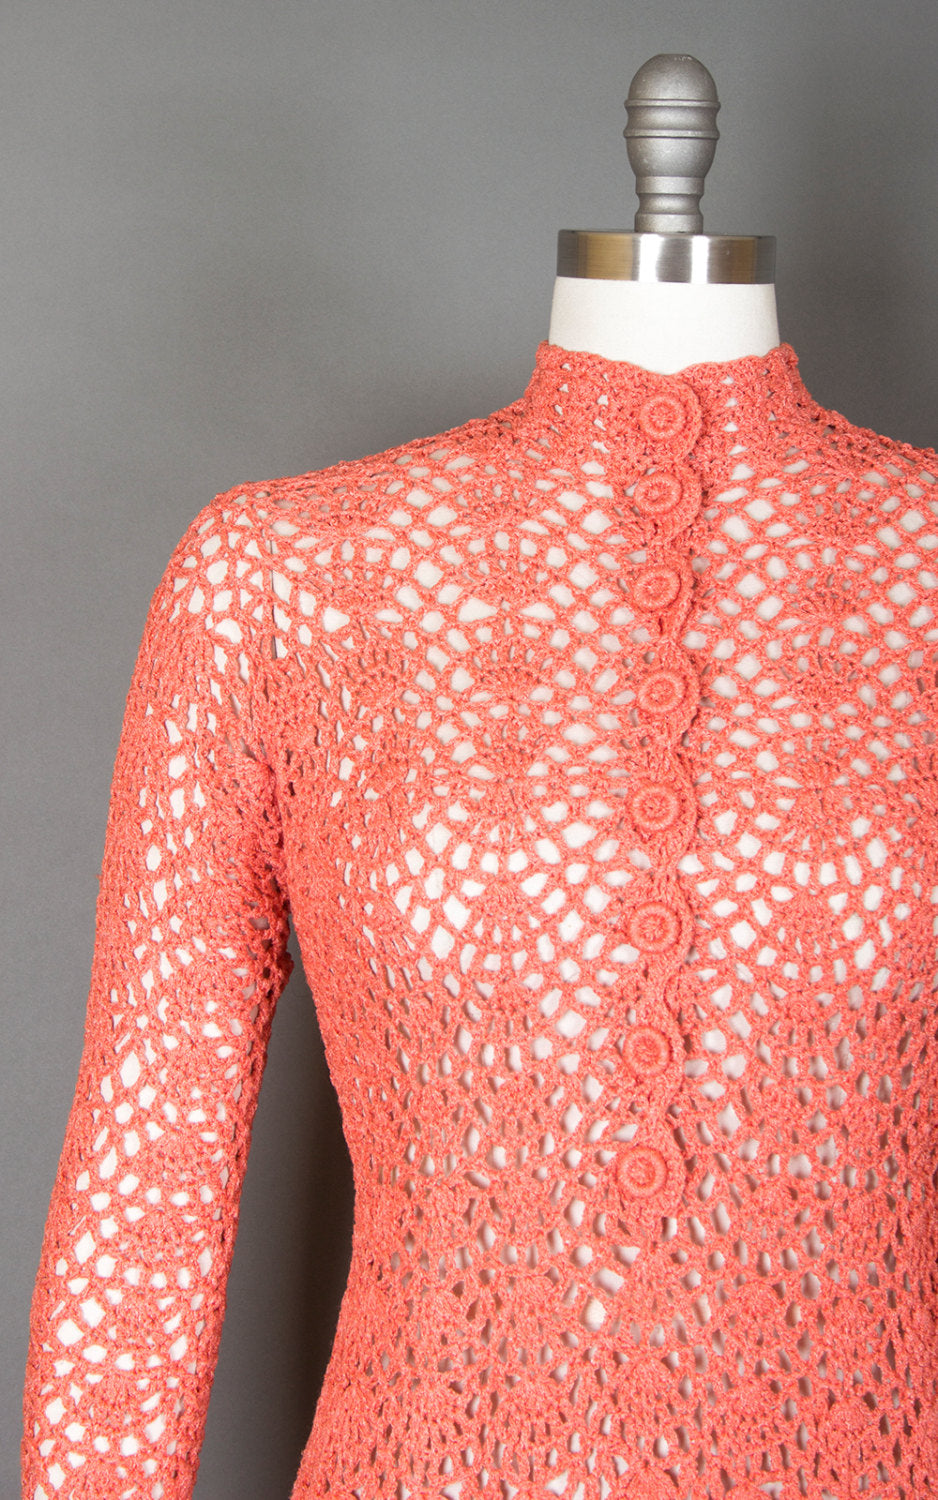 Vintage 1970s Sweater Dress | 70s Crochet Peach See Through Sheer Boho Maxi Wedding Dress (small/medium)